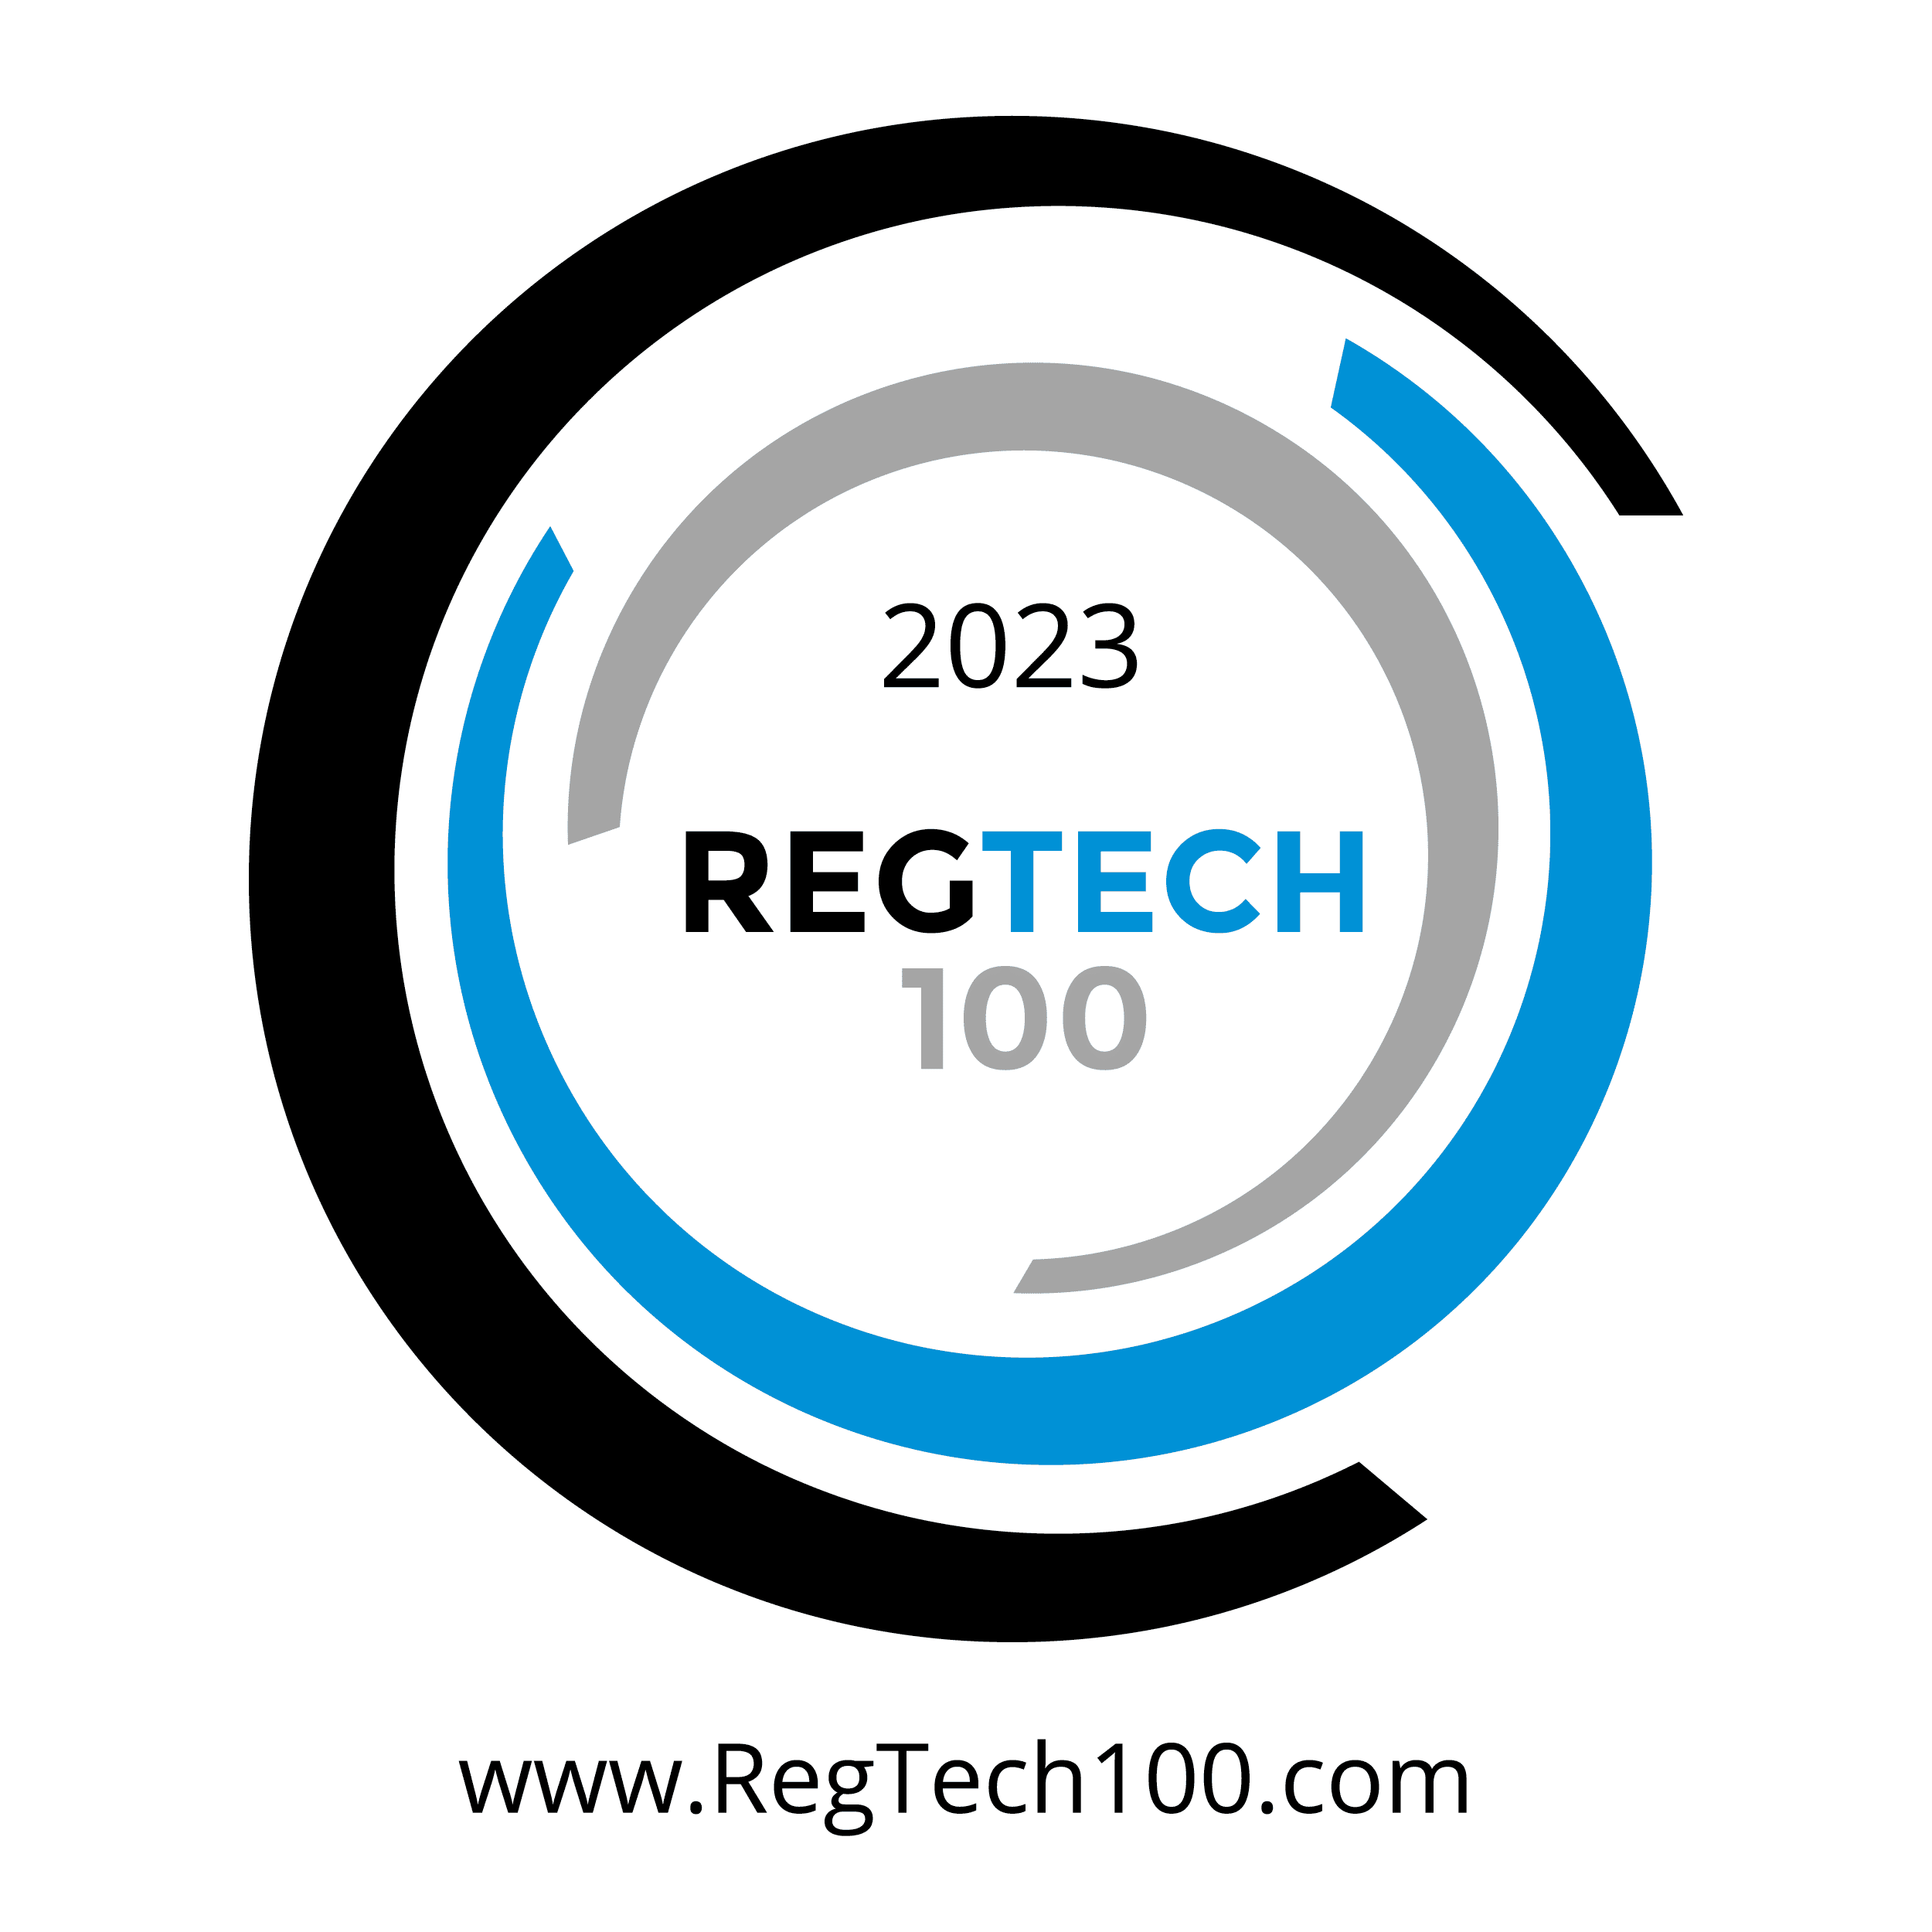 Fingerprint is a RegTech100 Company for 2023